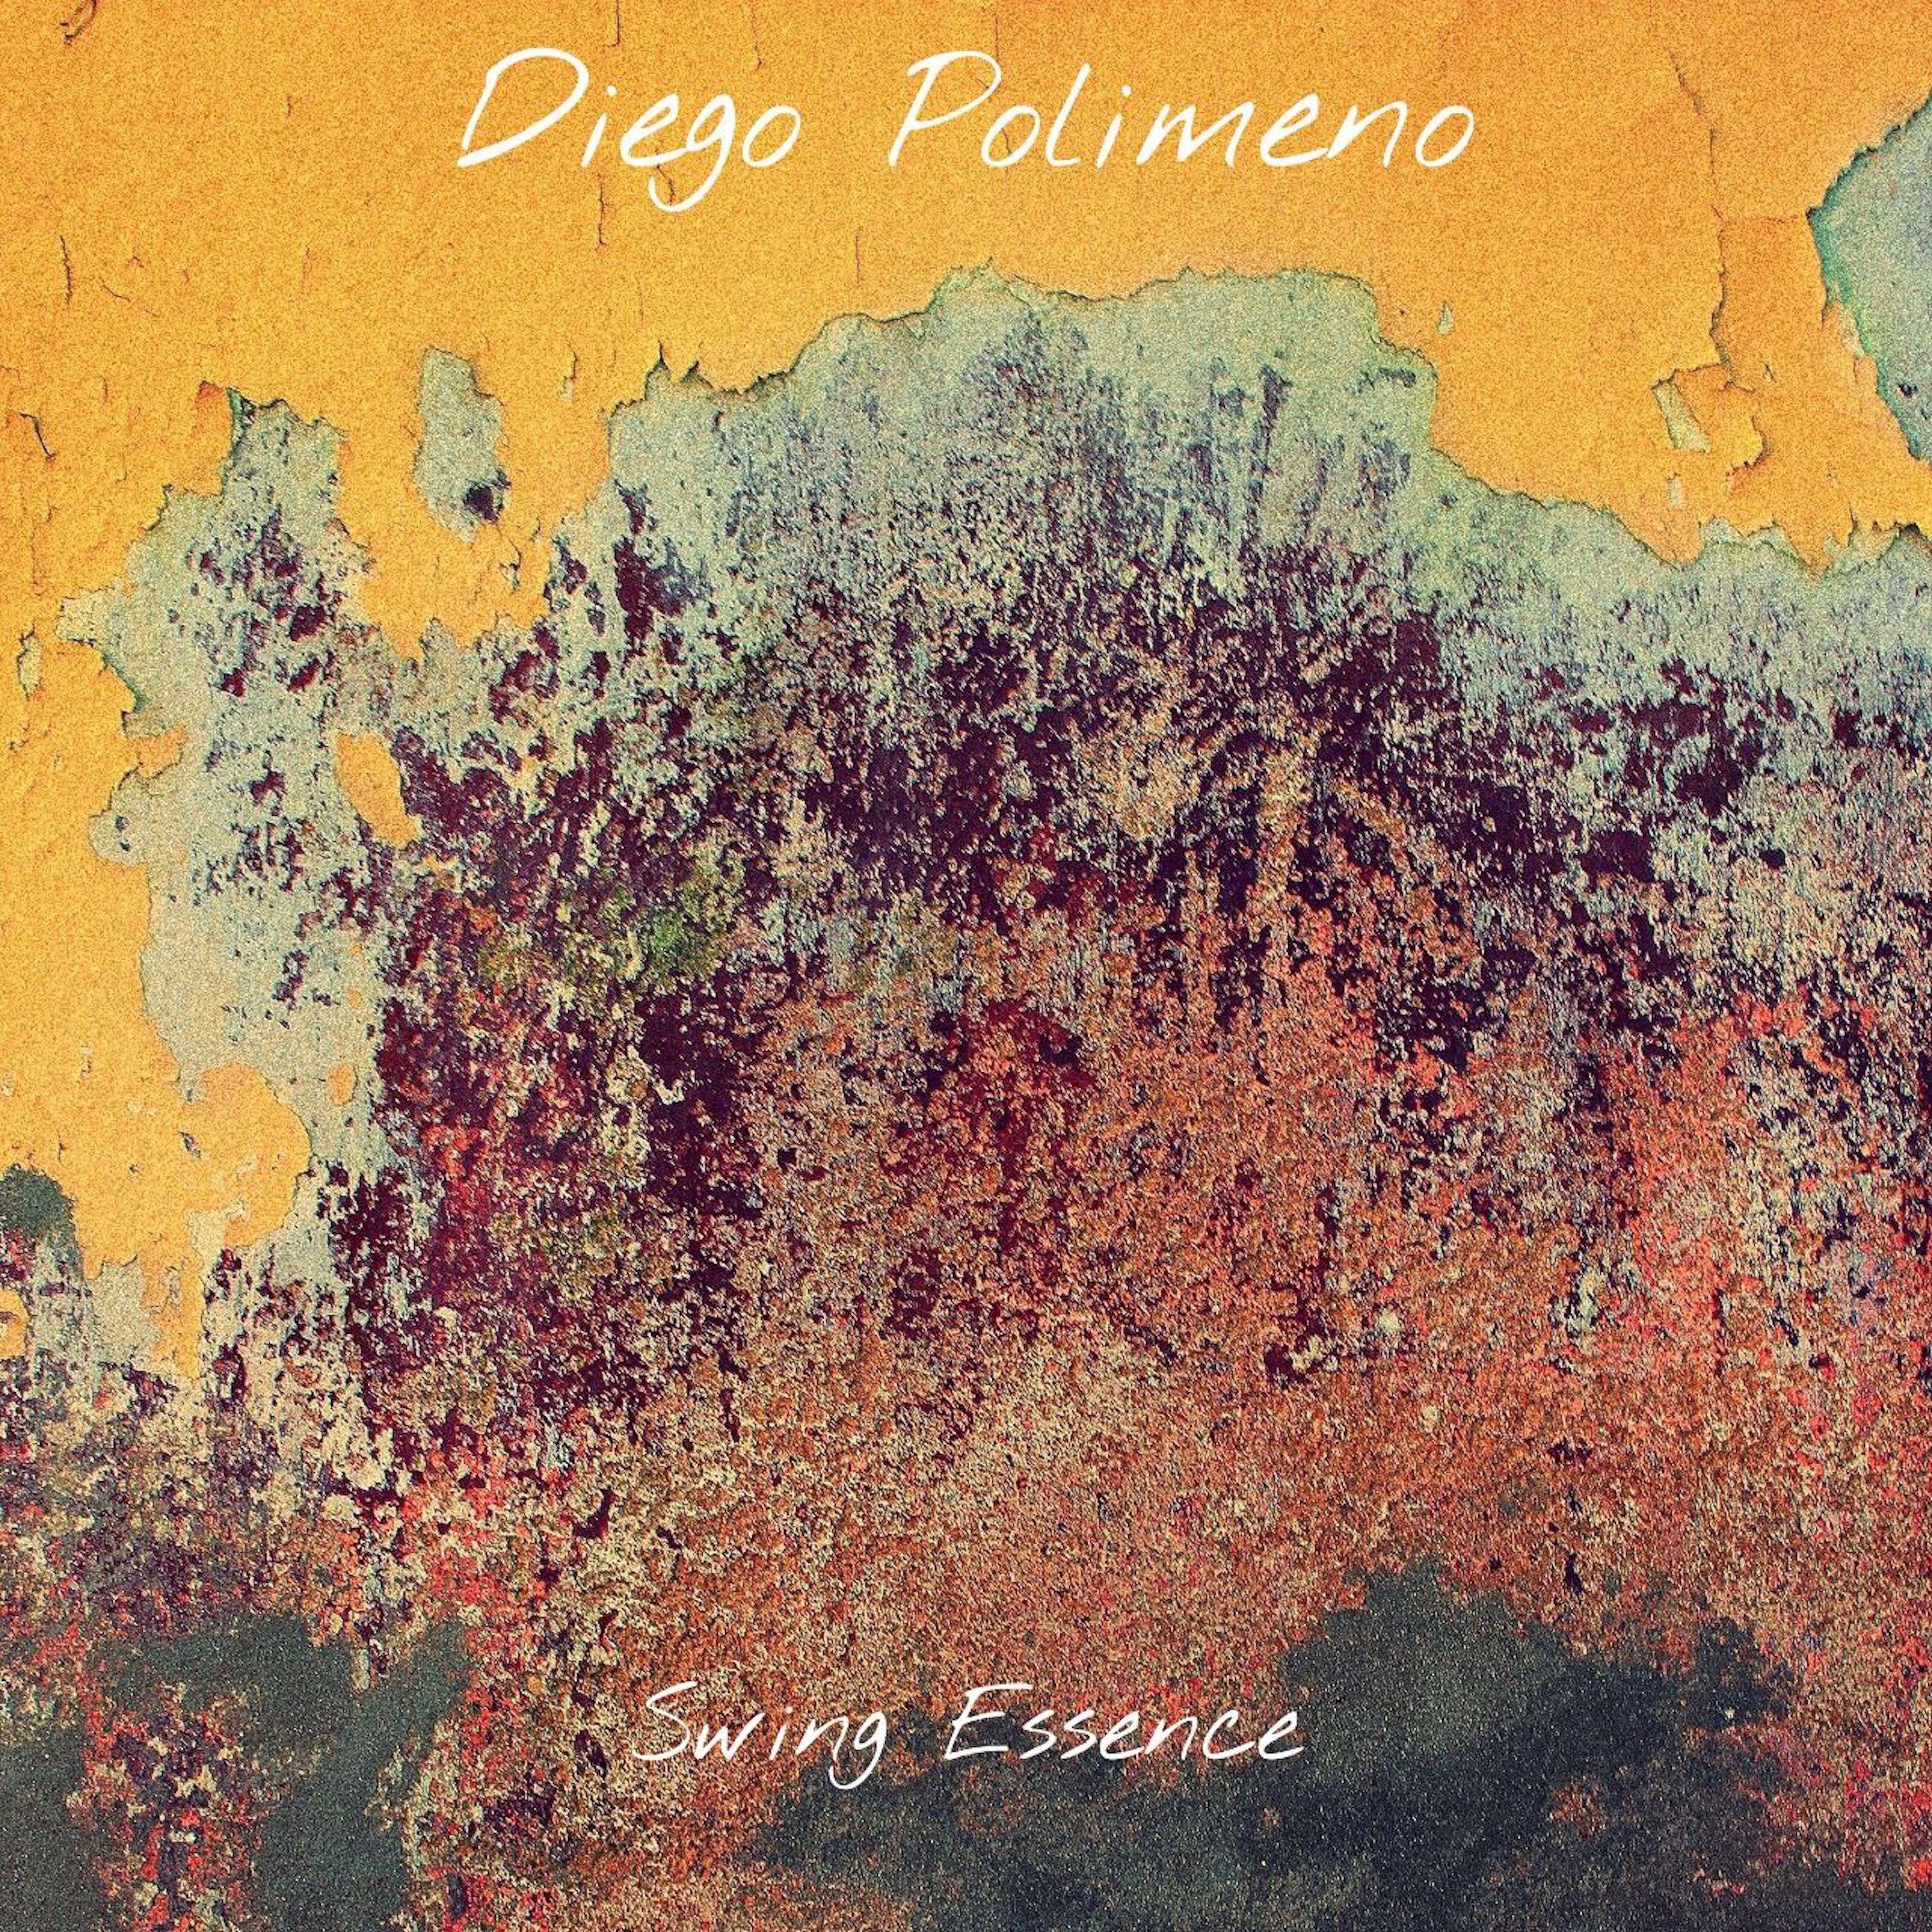 Diego Polimeno - Altered Times